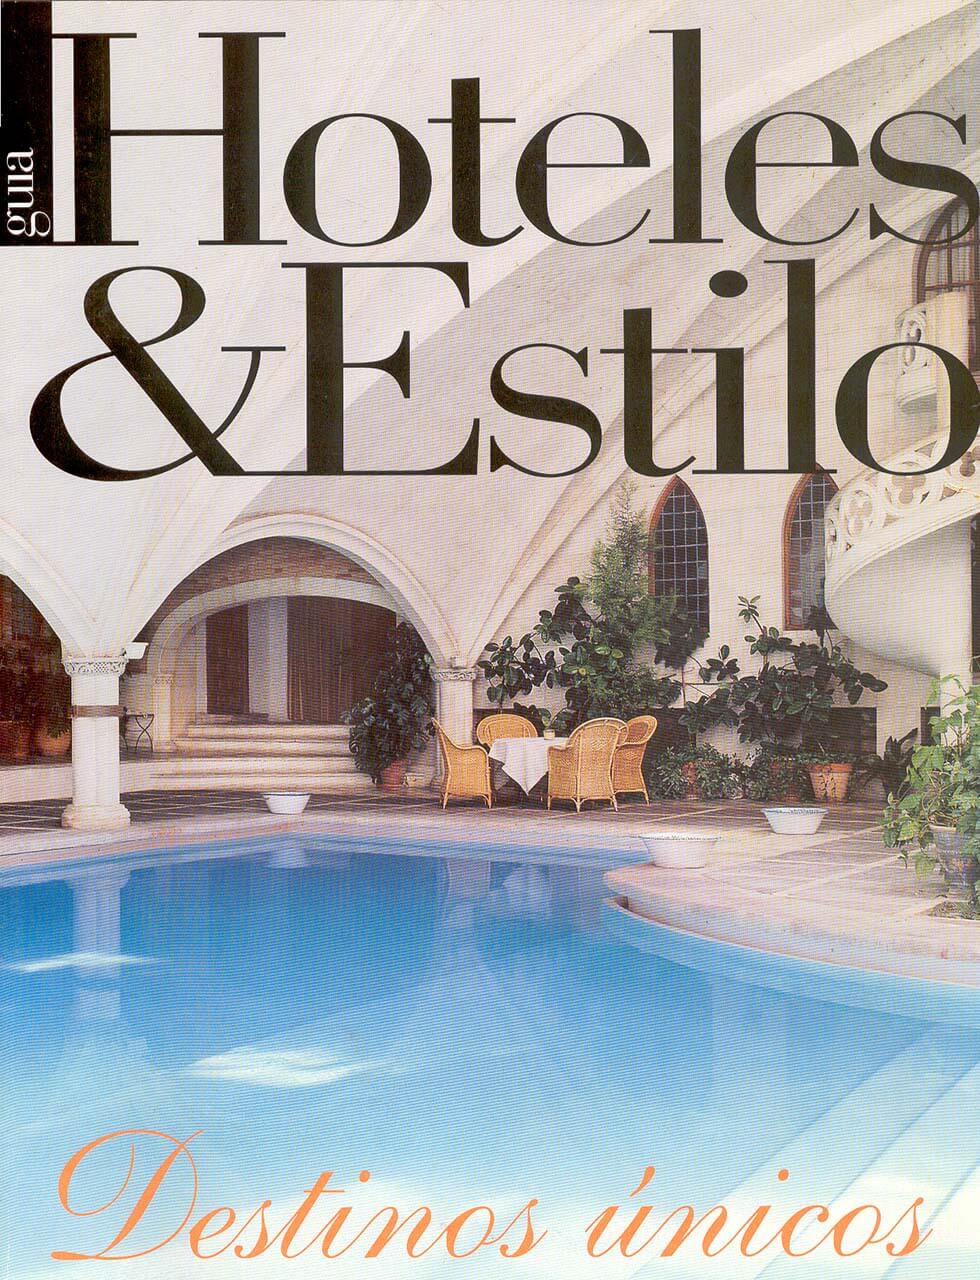 revista 2000 guia hoteles estilo portada antonio obrador 01